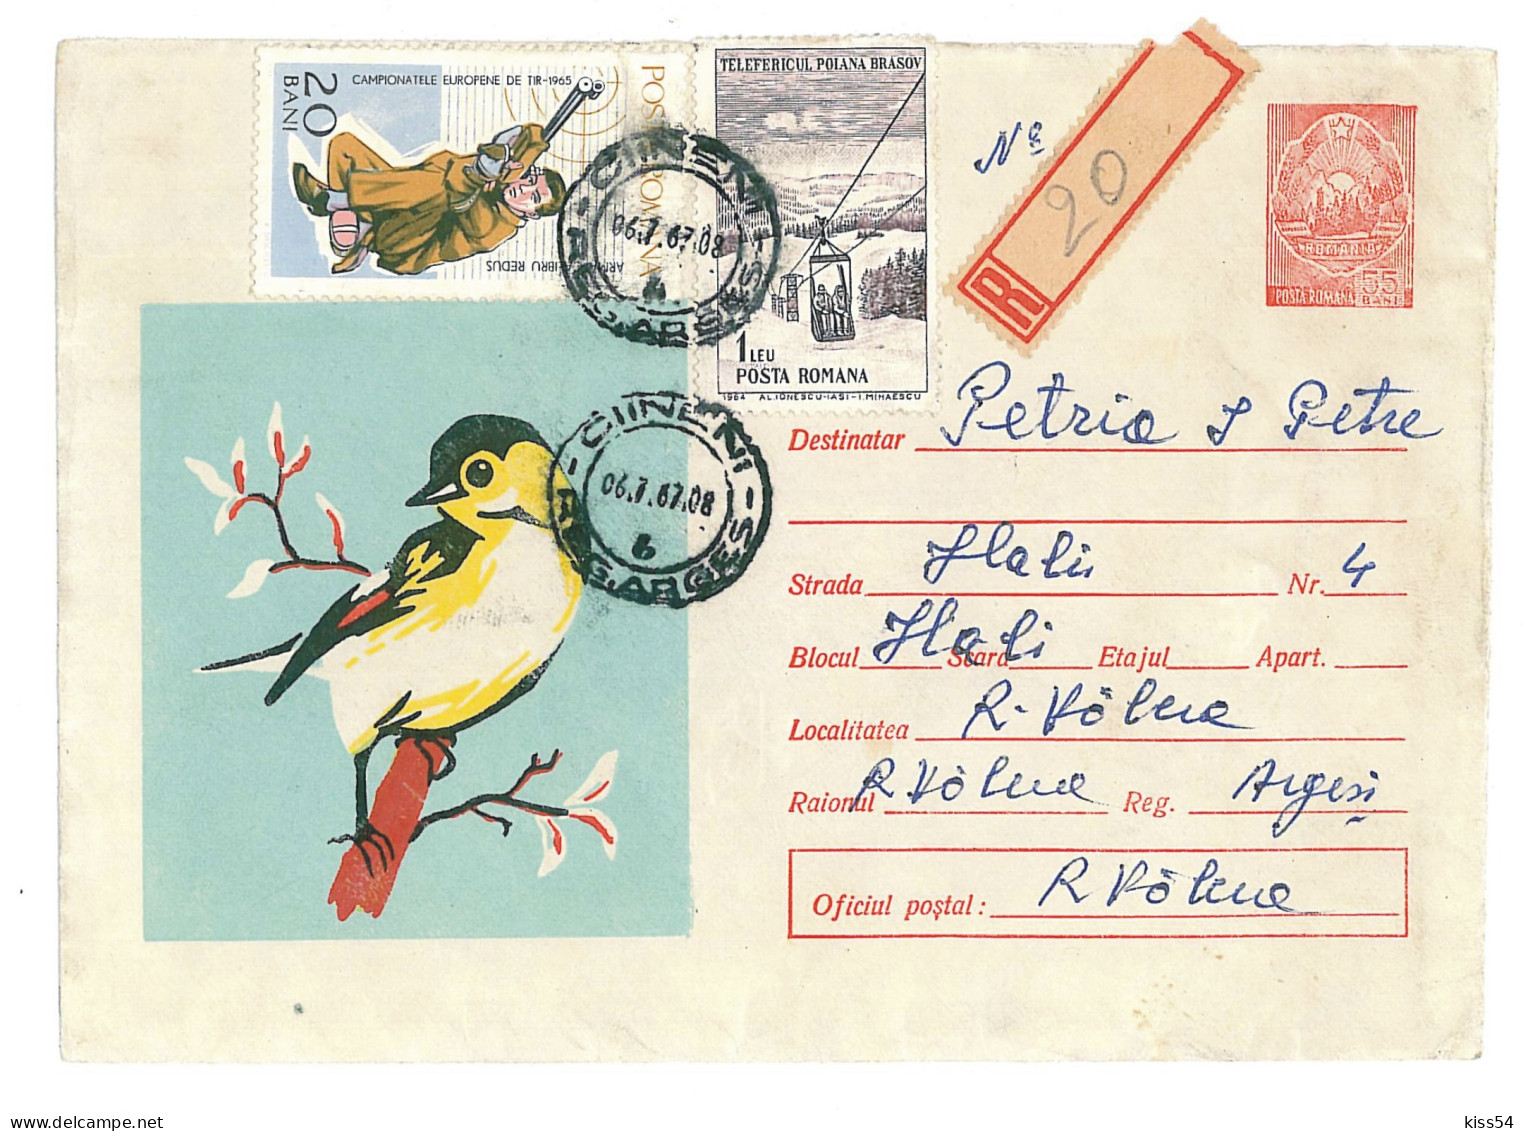 IP 67 - 035 BIRD, Titmouse, Romania - Registered Stationery - Used - 1967 - Postal Stationery